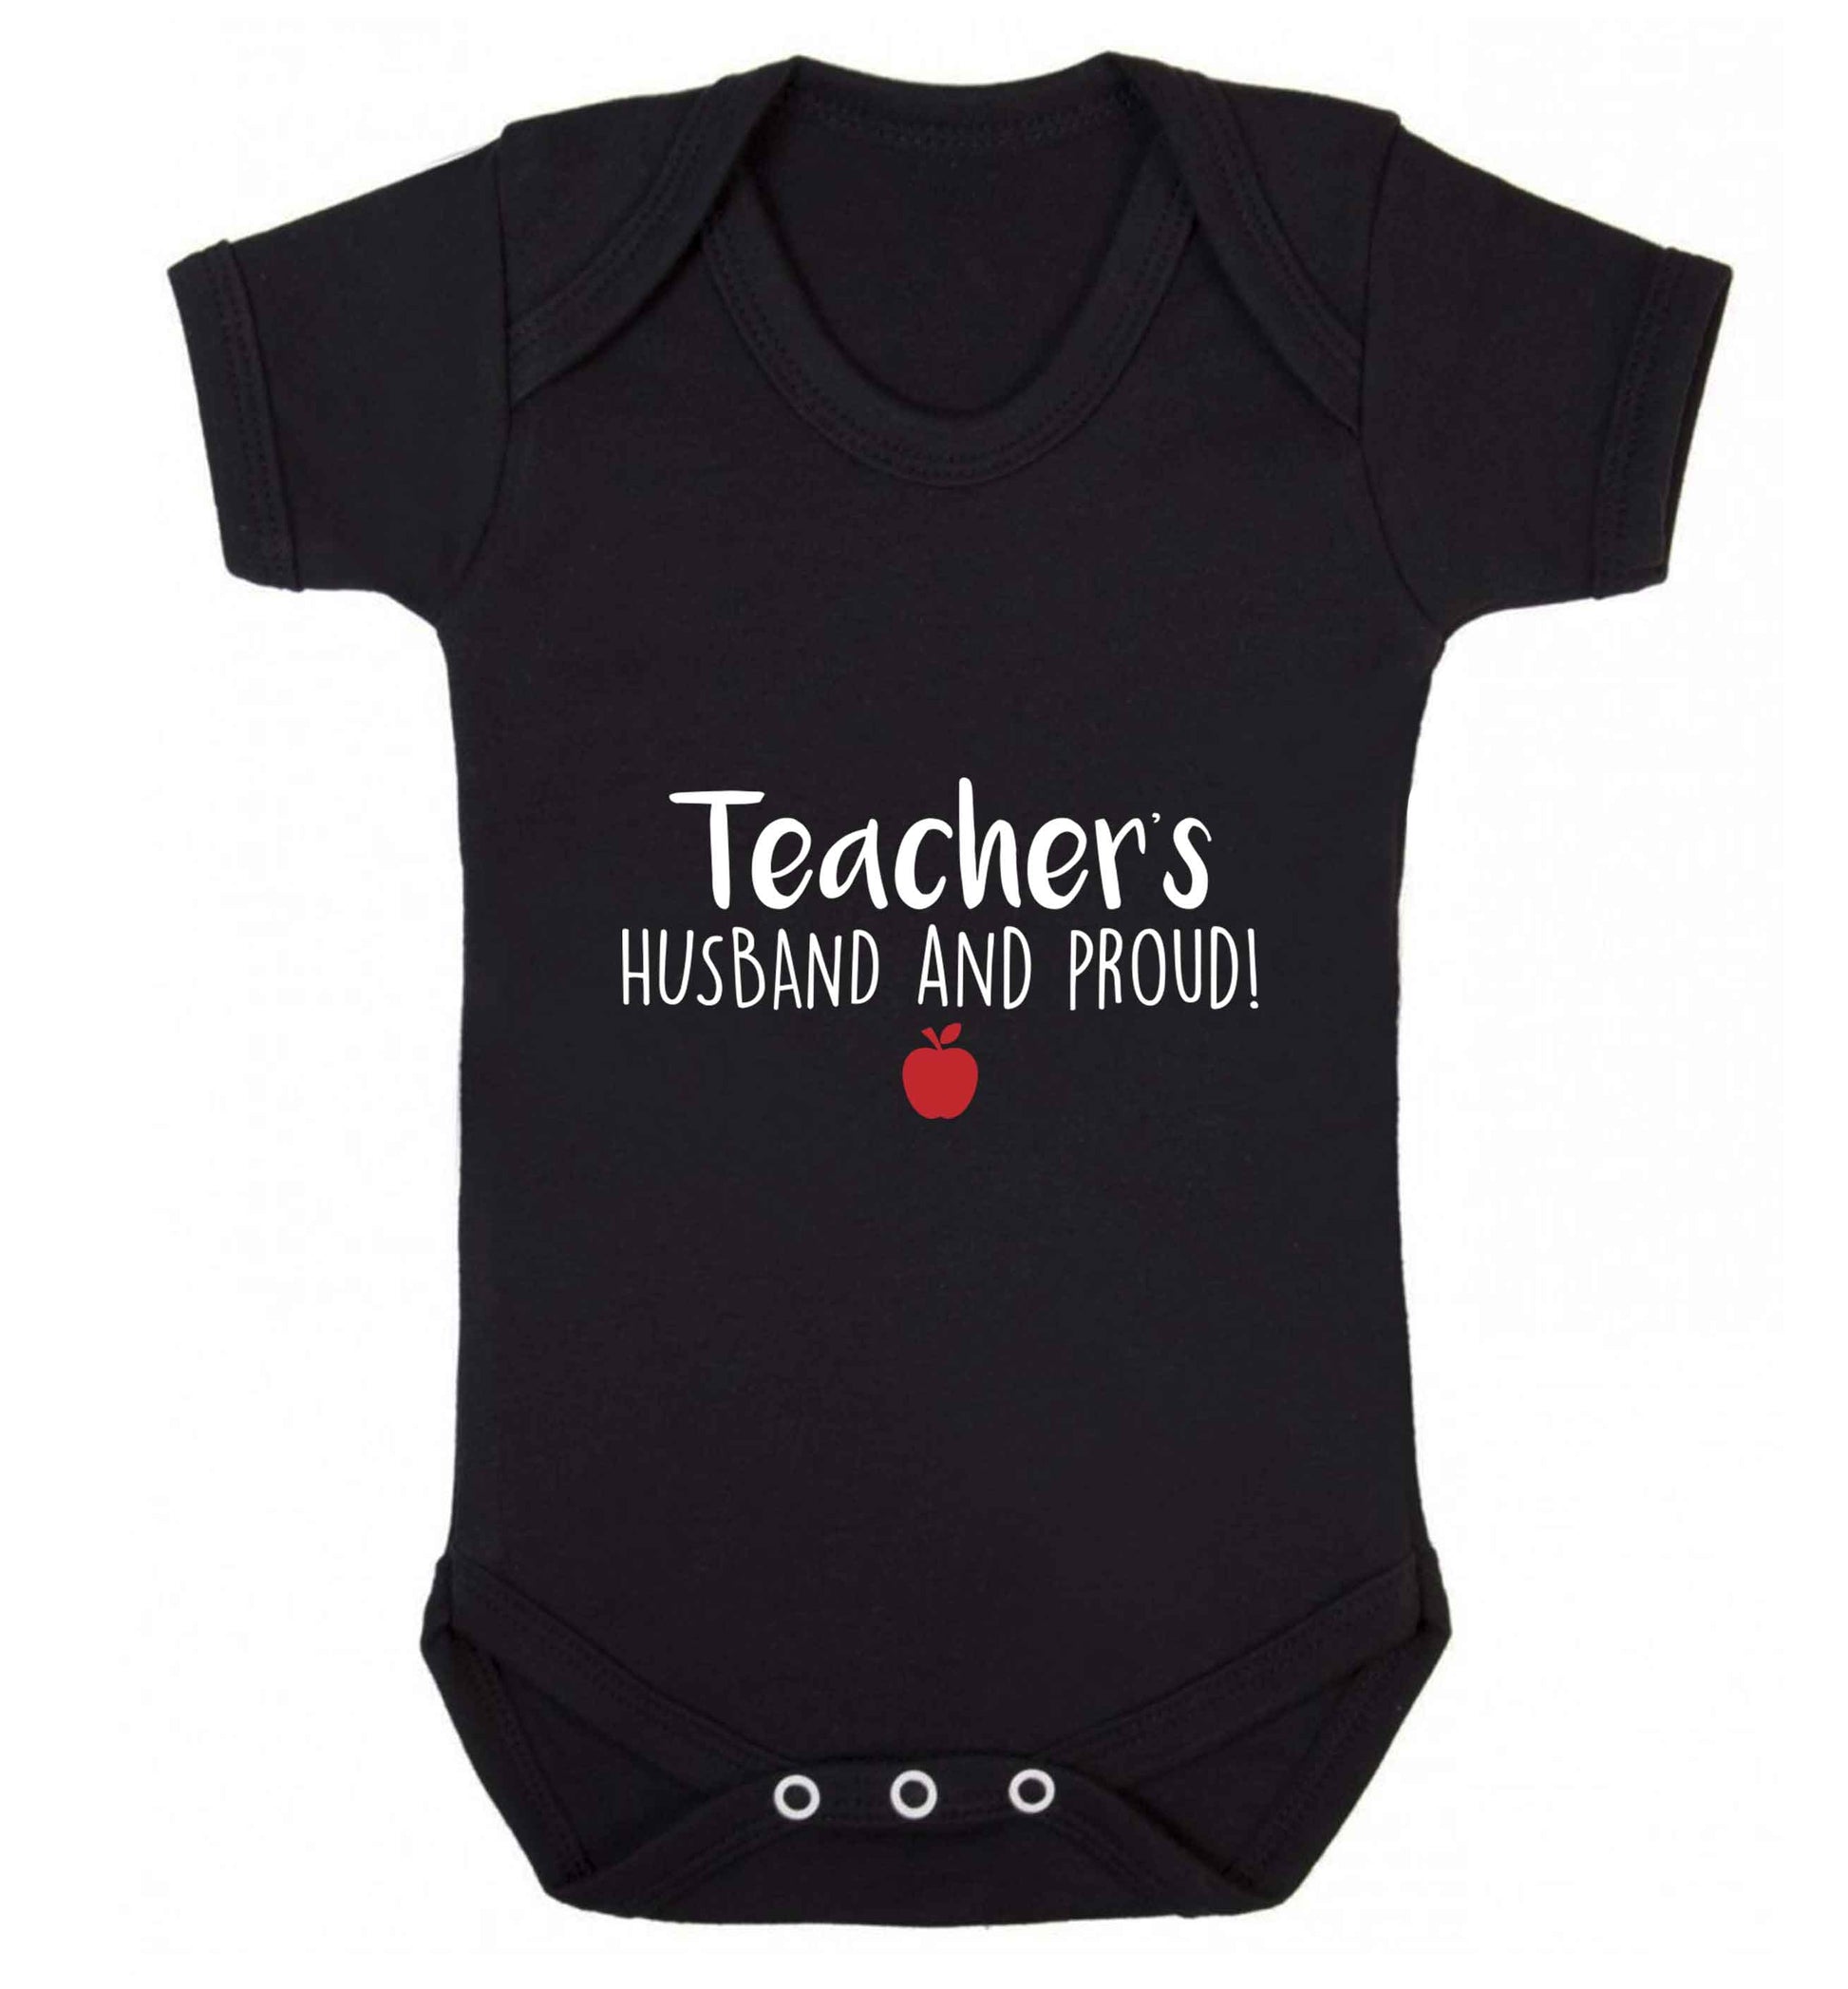 Teachers husband and proud baby vest black 18-24 months